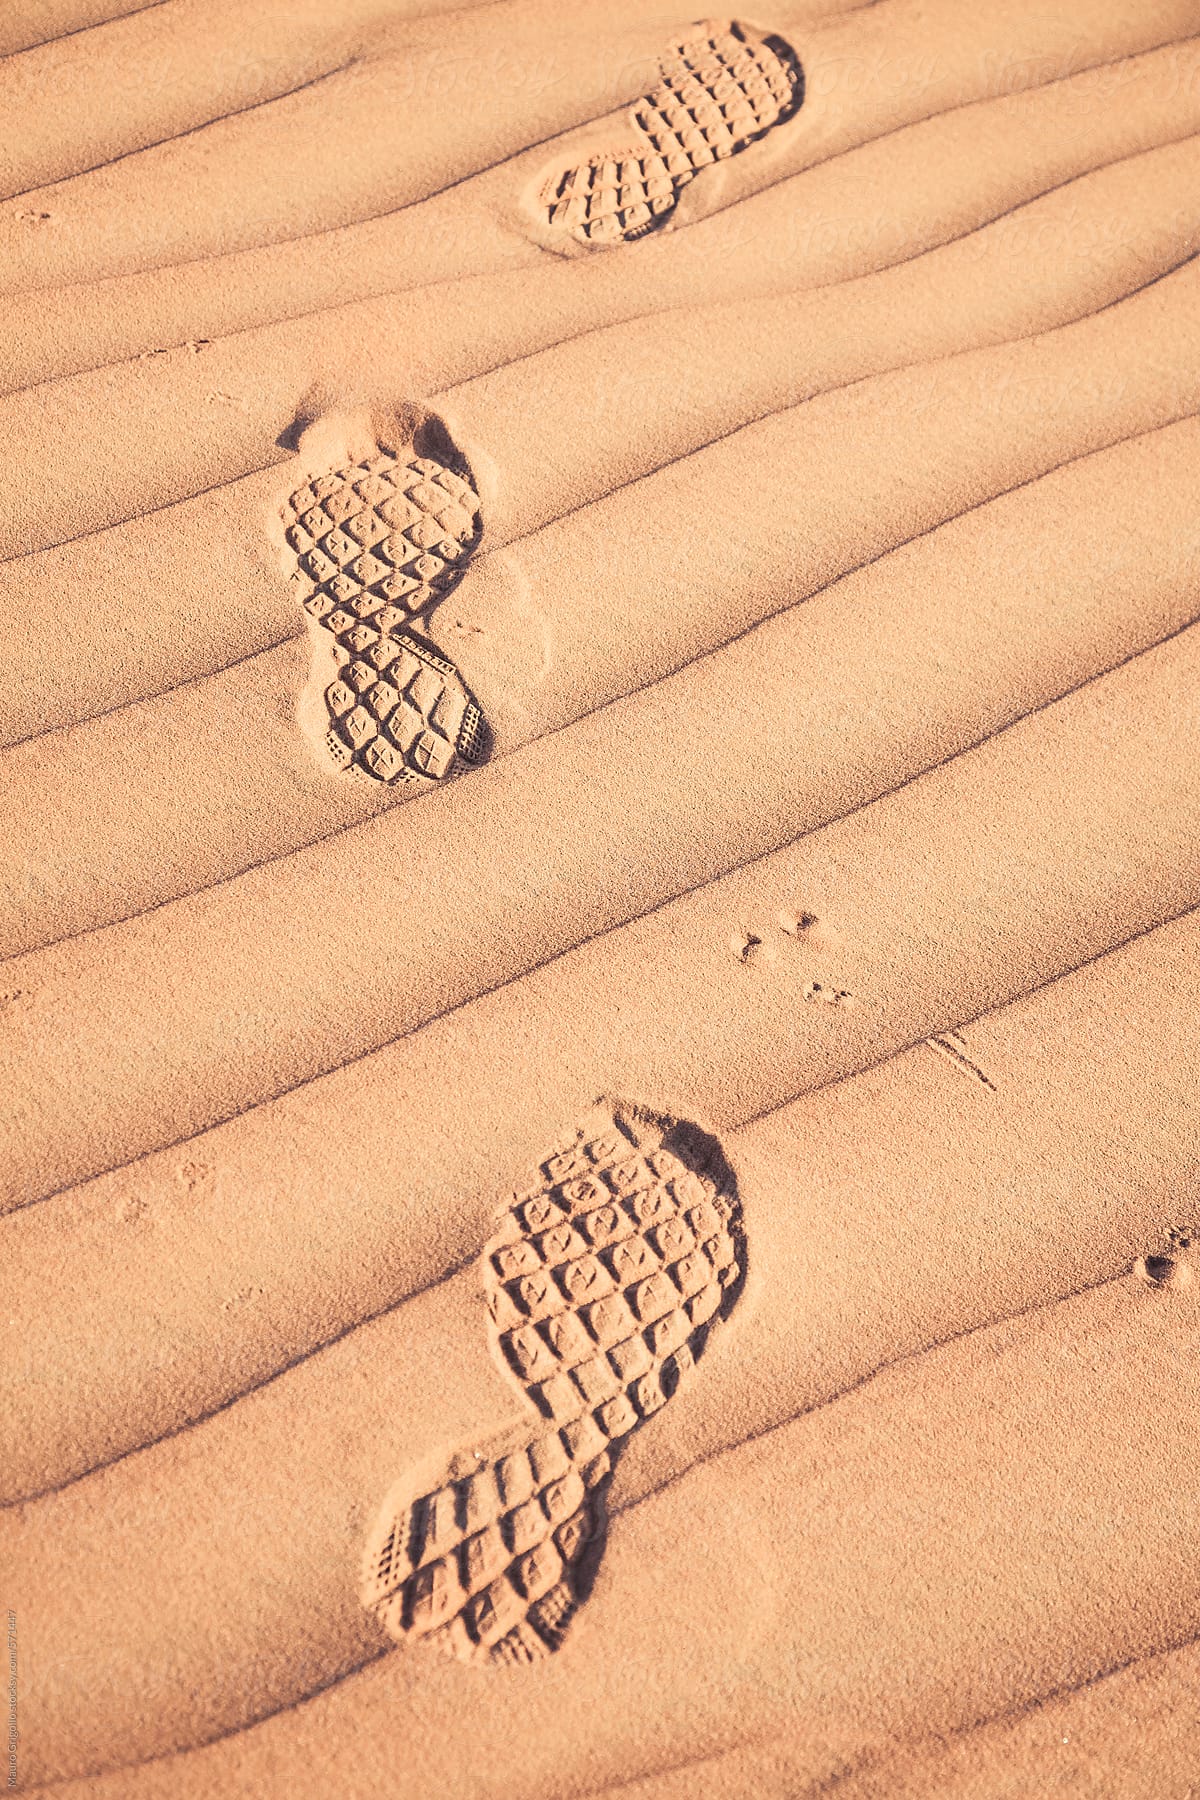 Footprints on sand in the desert.